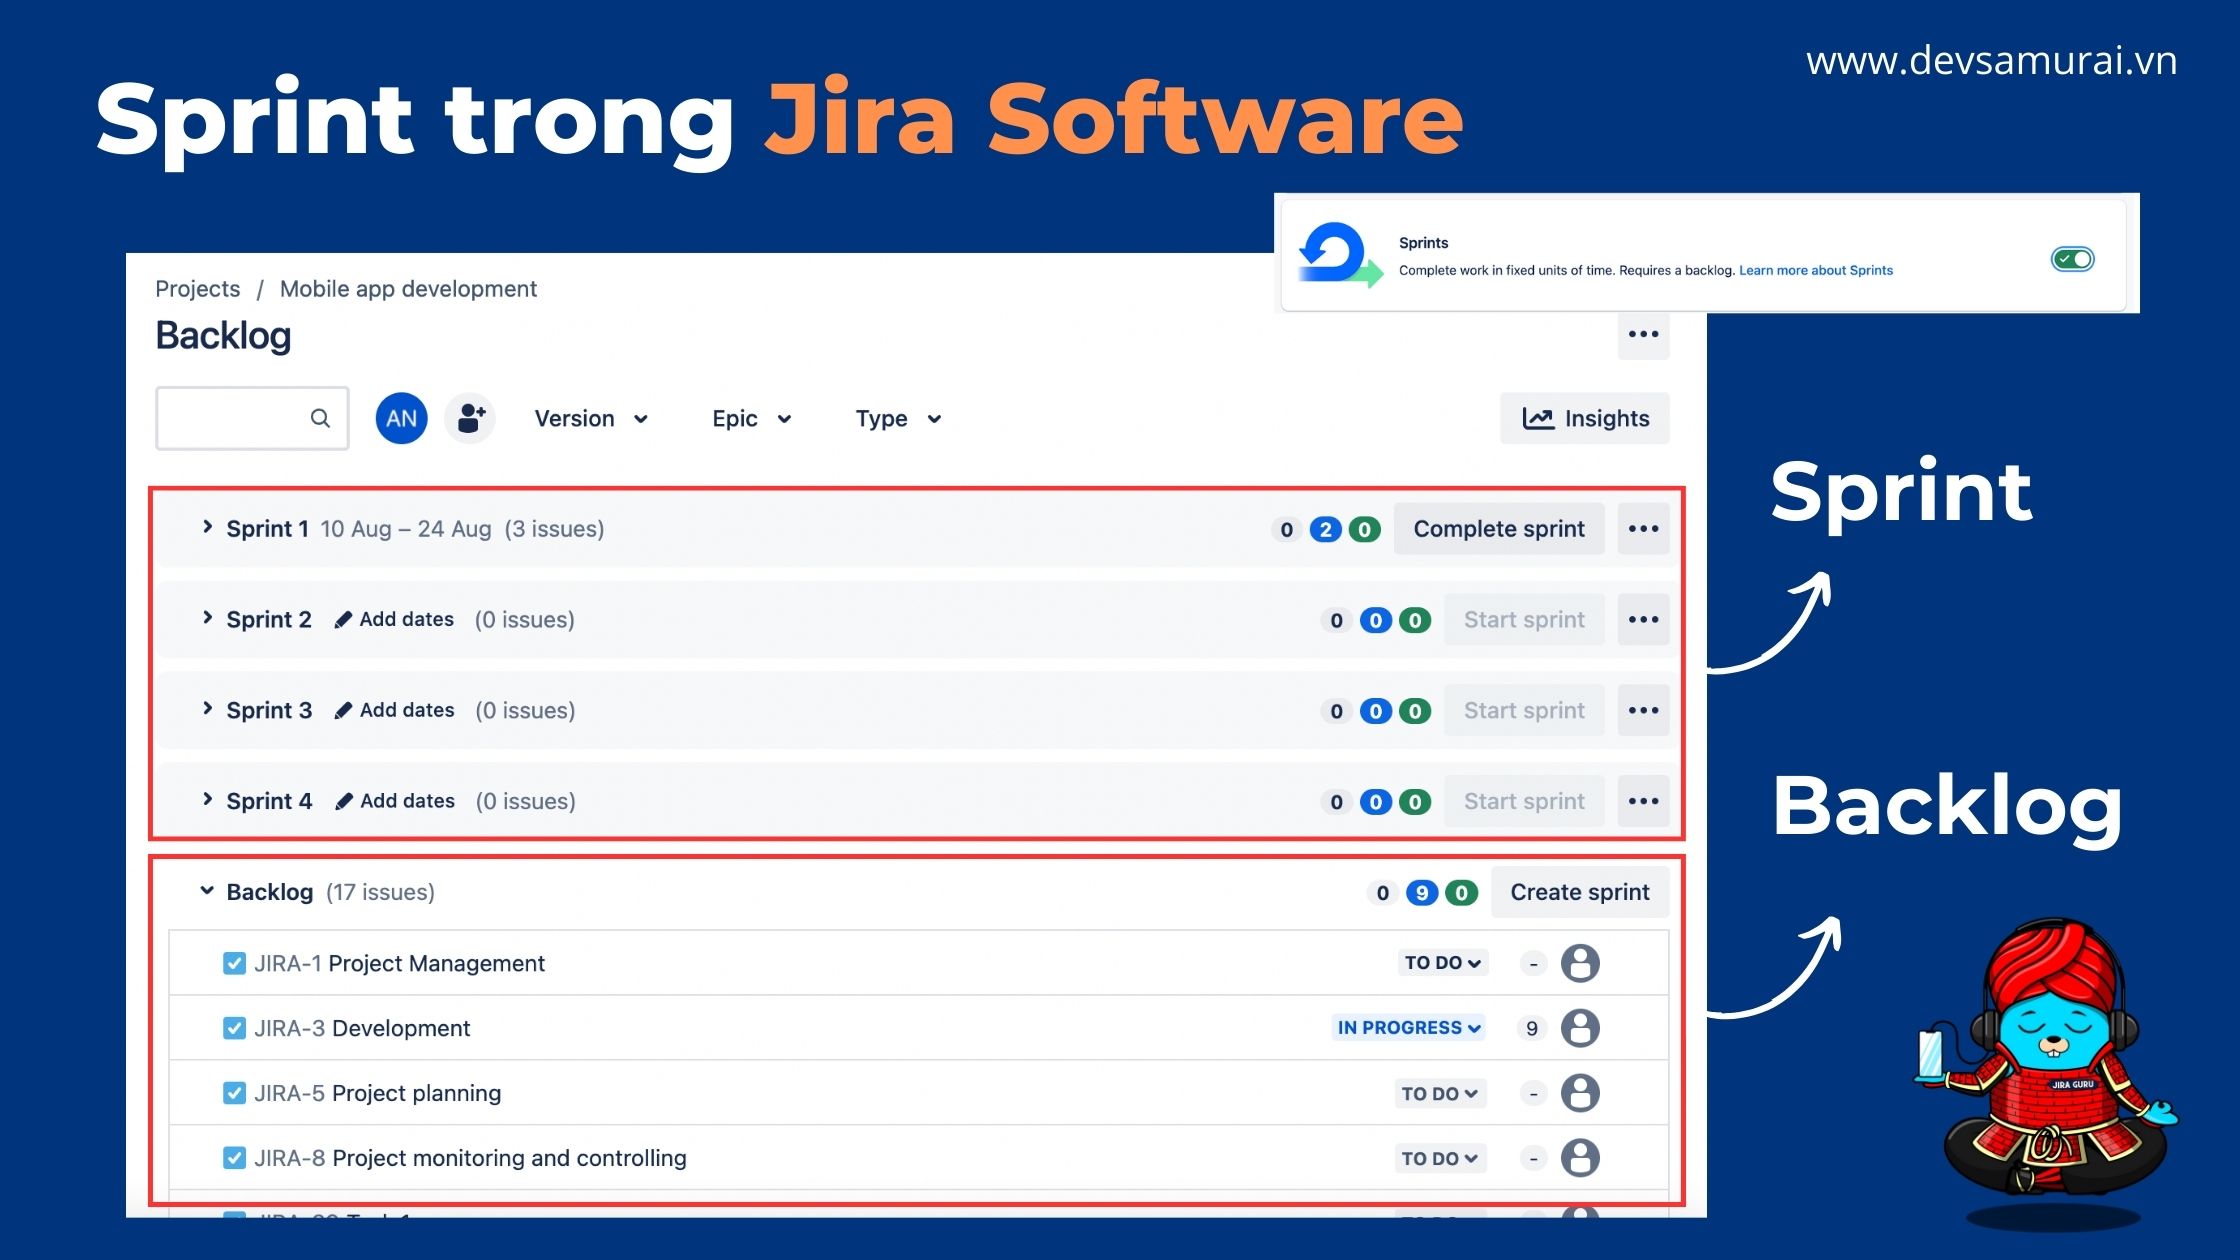 Sprint in Jira Software